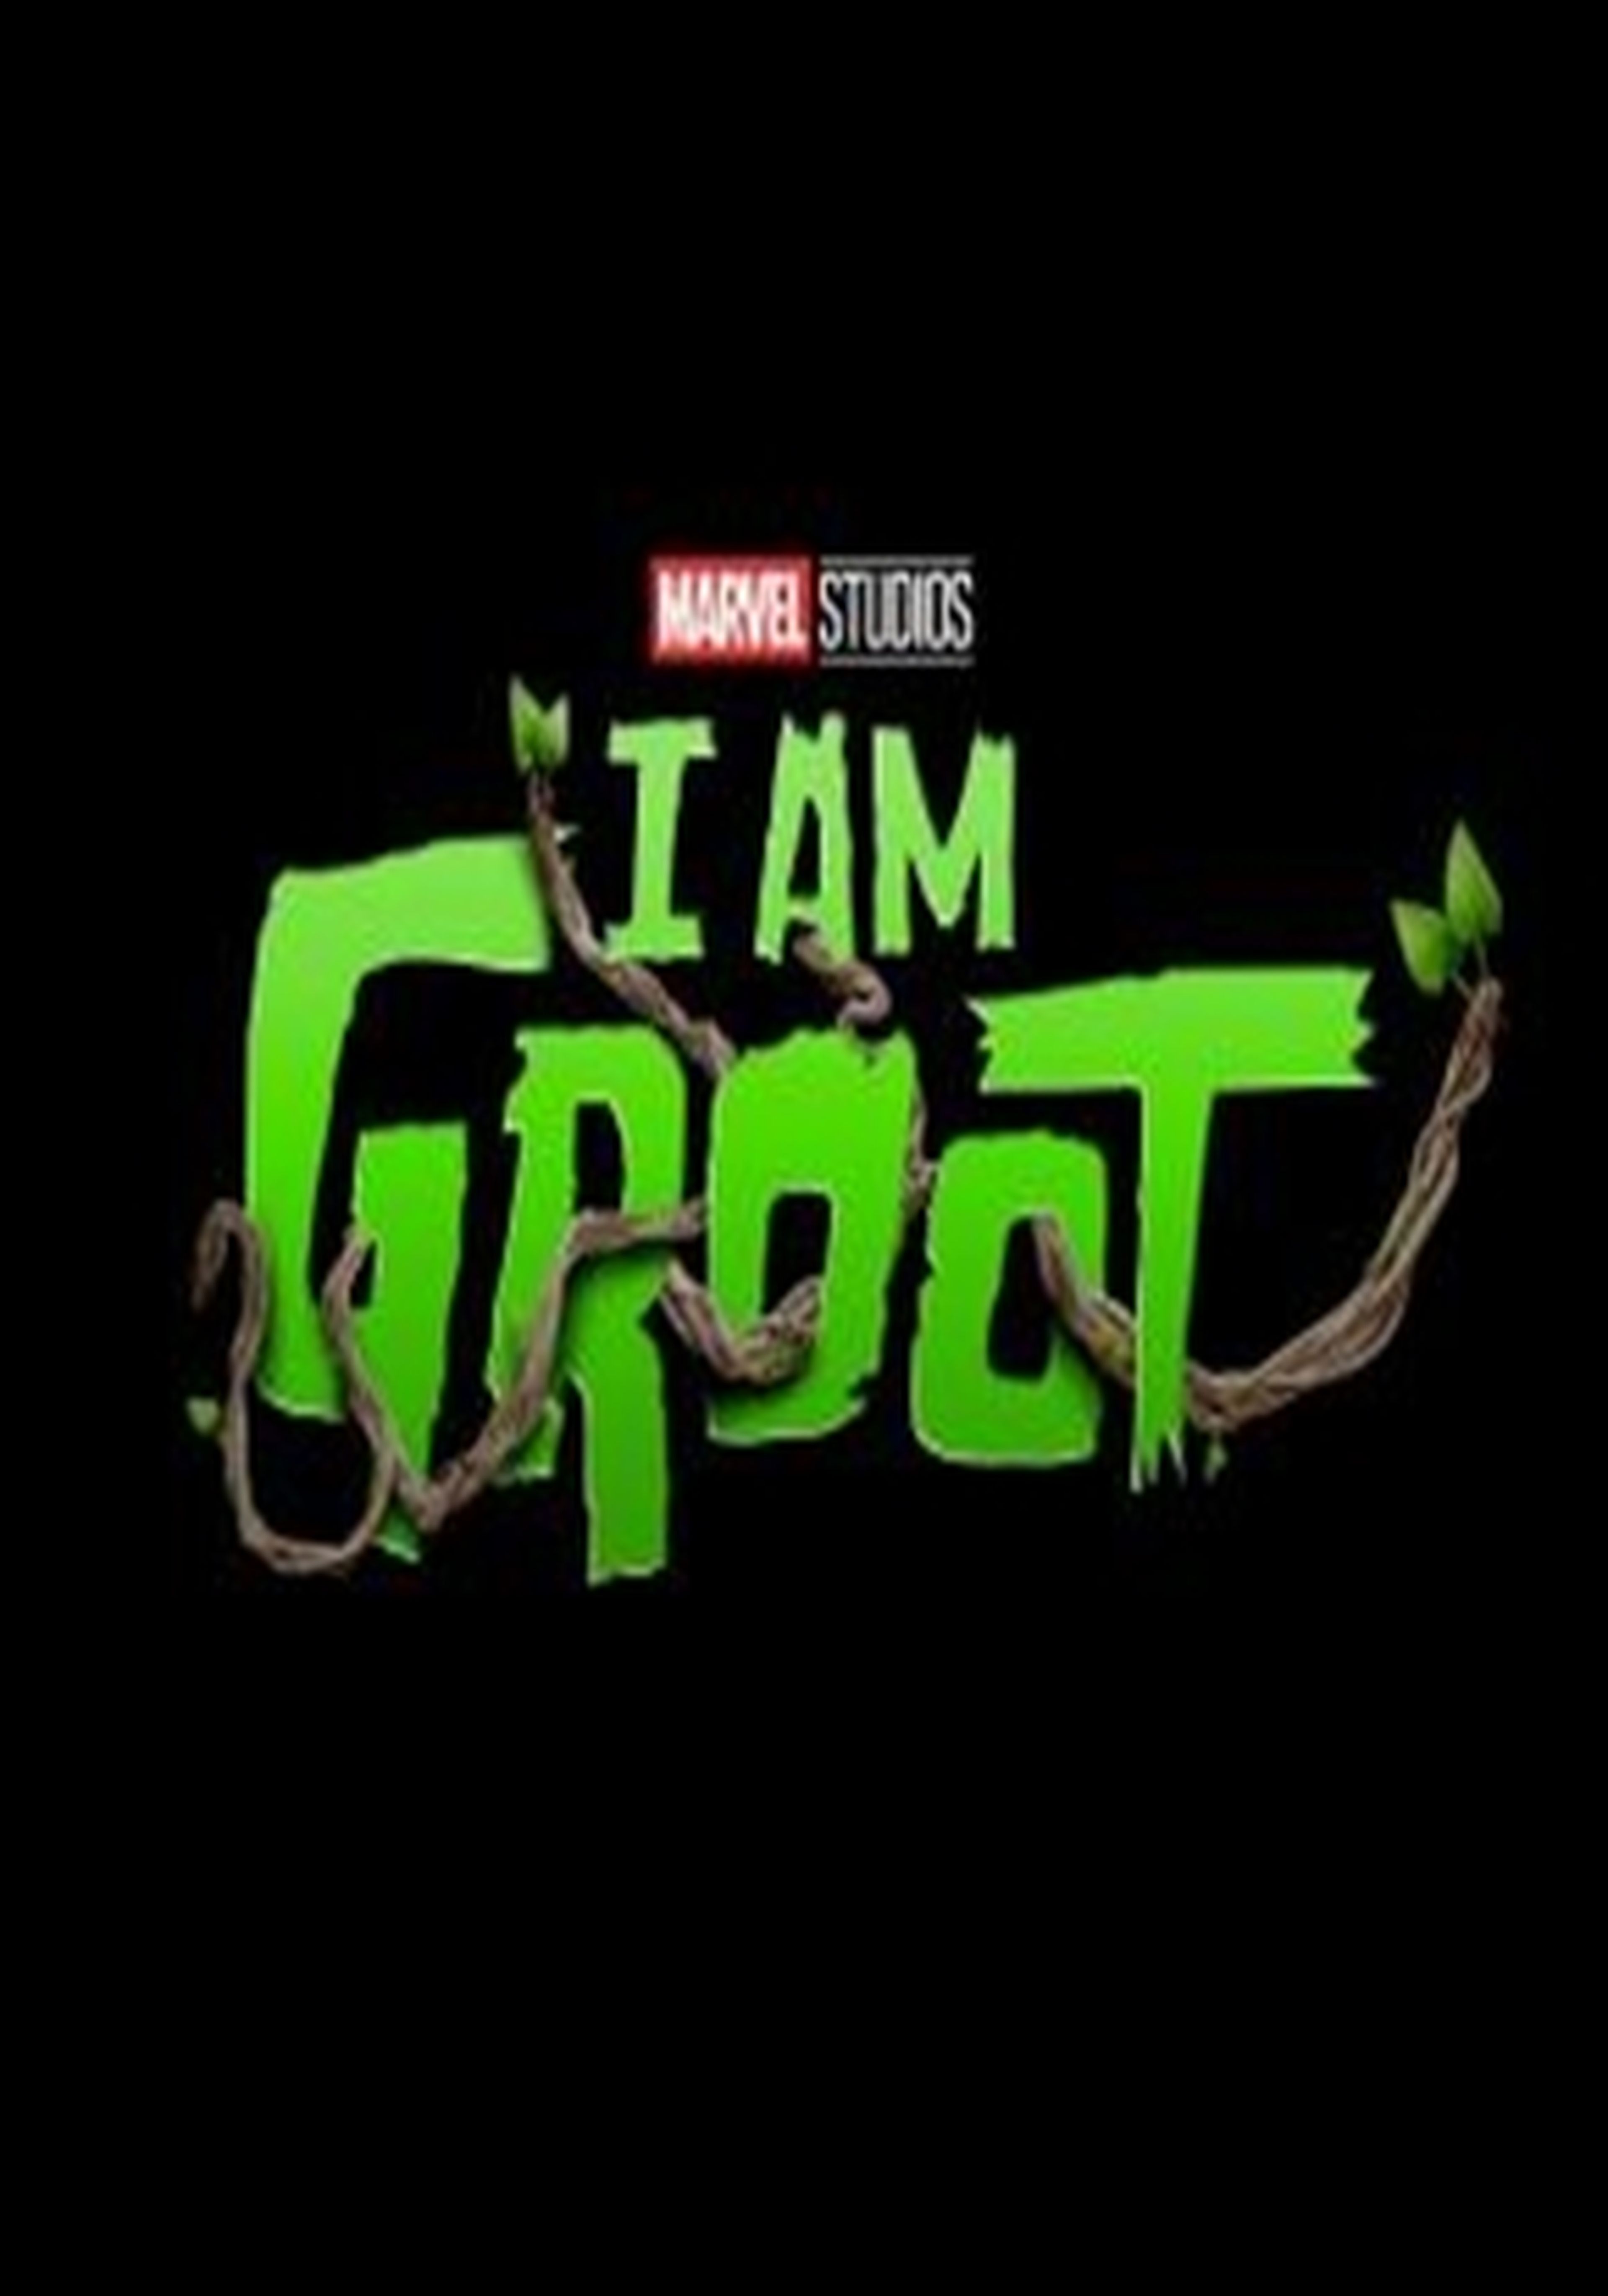 I Am Groot cartel